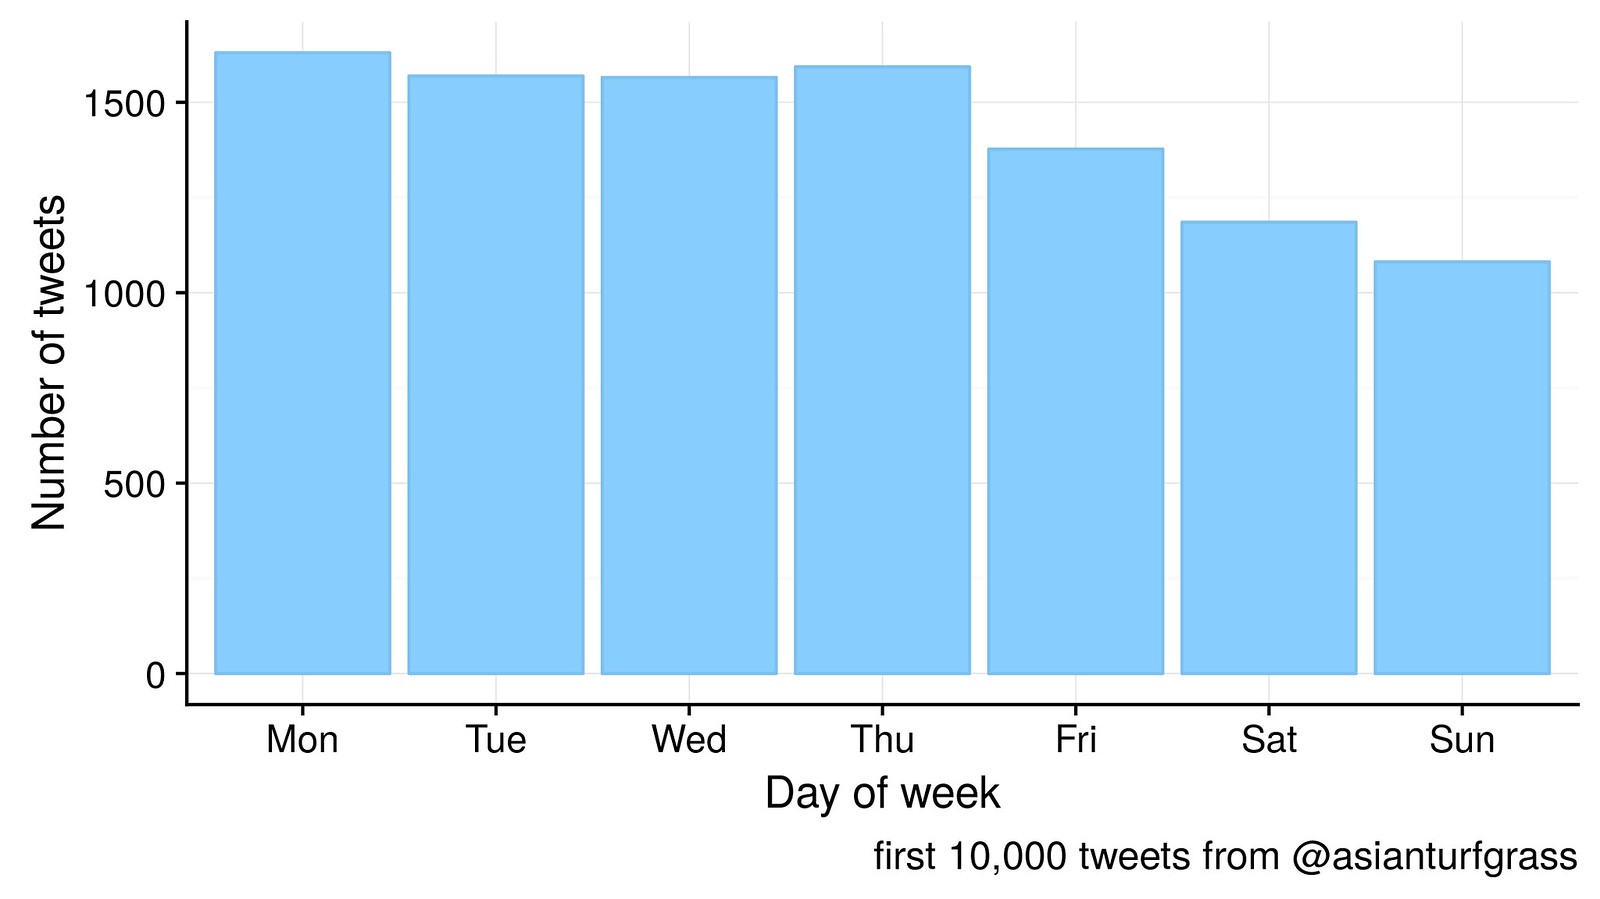 tweets by day of week